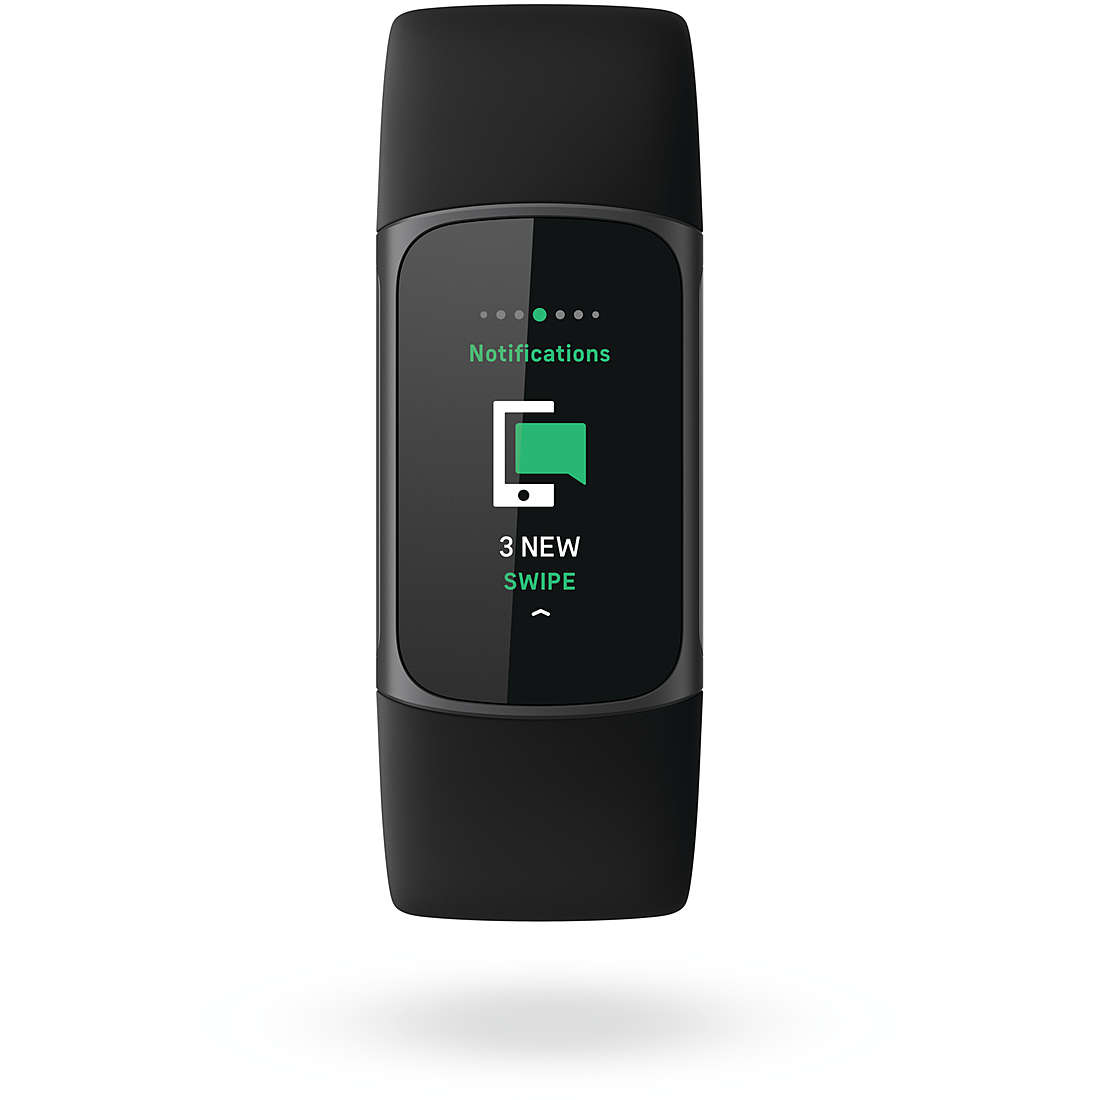 orologio Smartwatch Fitbit Charge unisex FB421BKBK